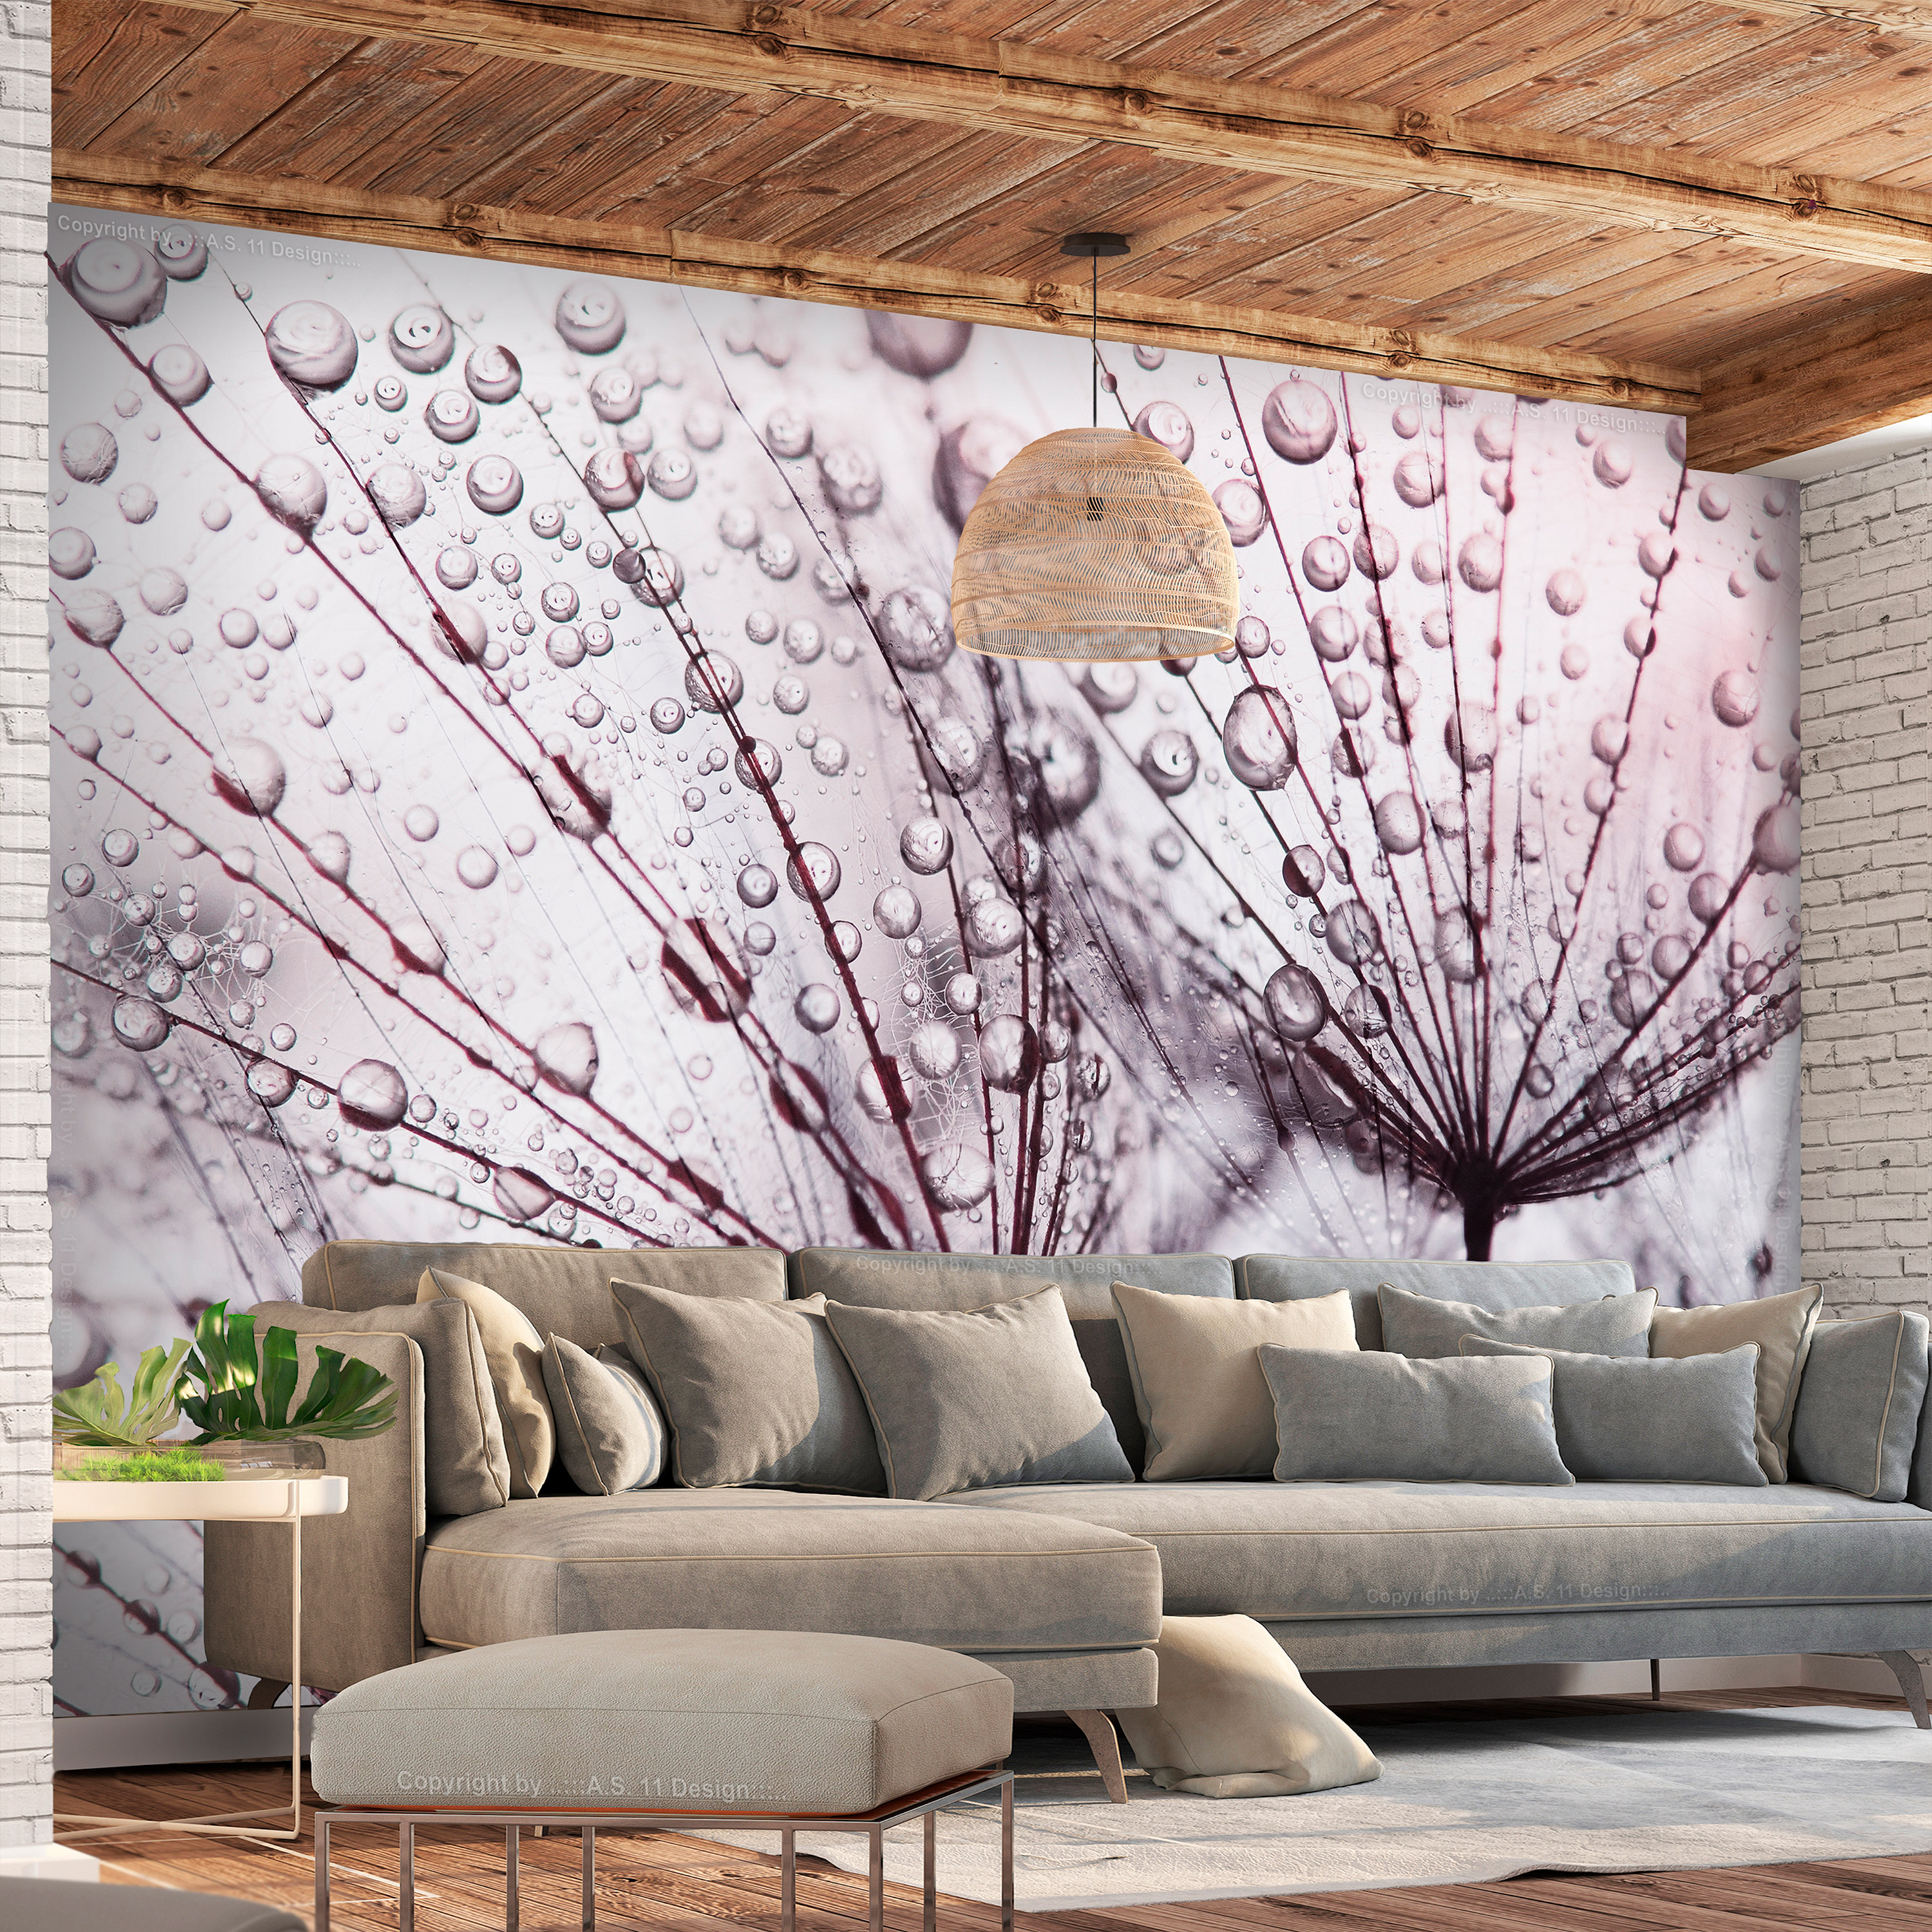 Self-adhesive Wallpaper - Rainy Time - 196x140